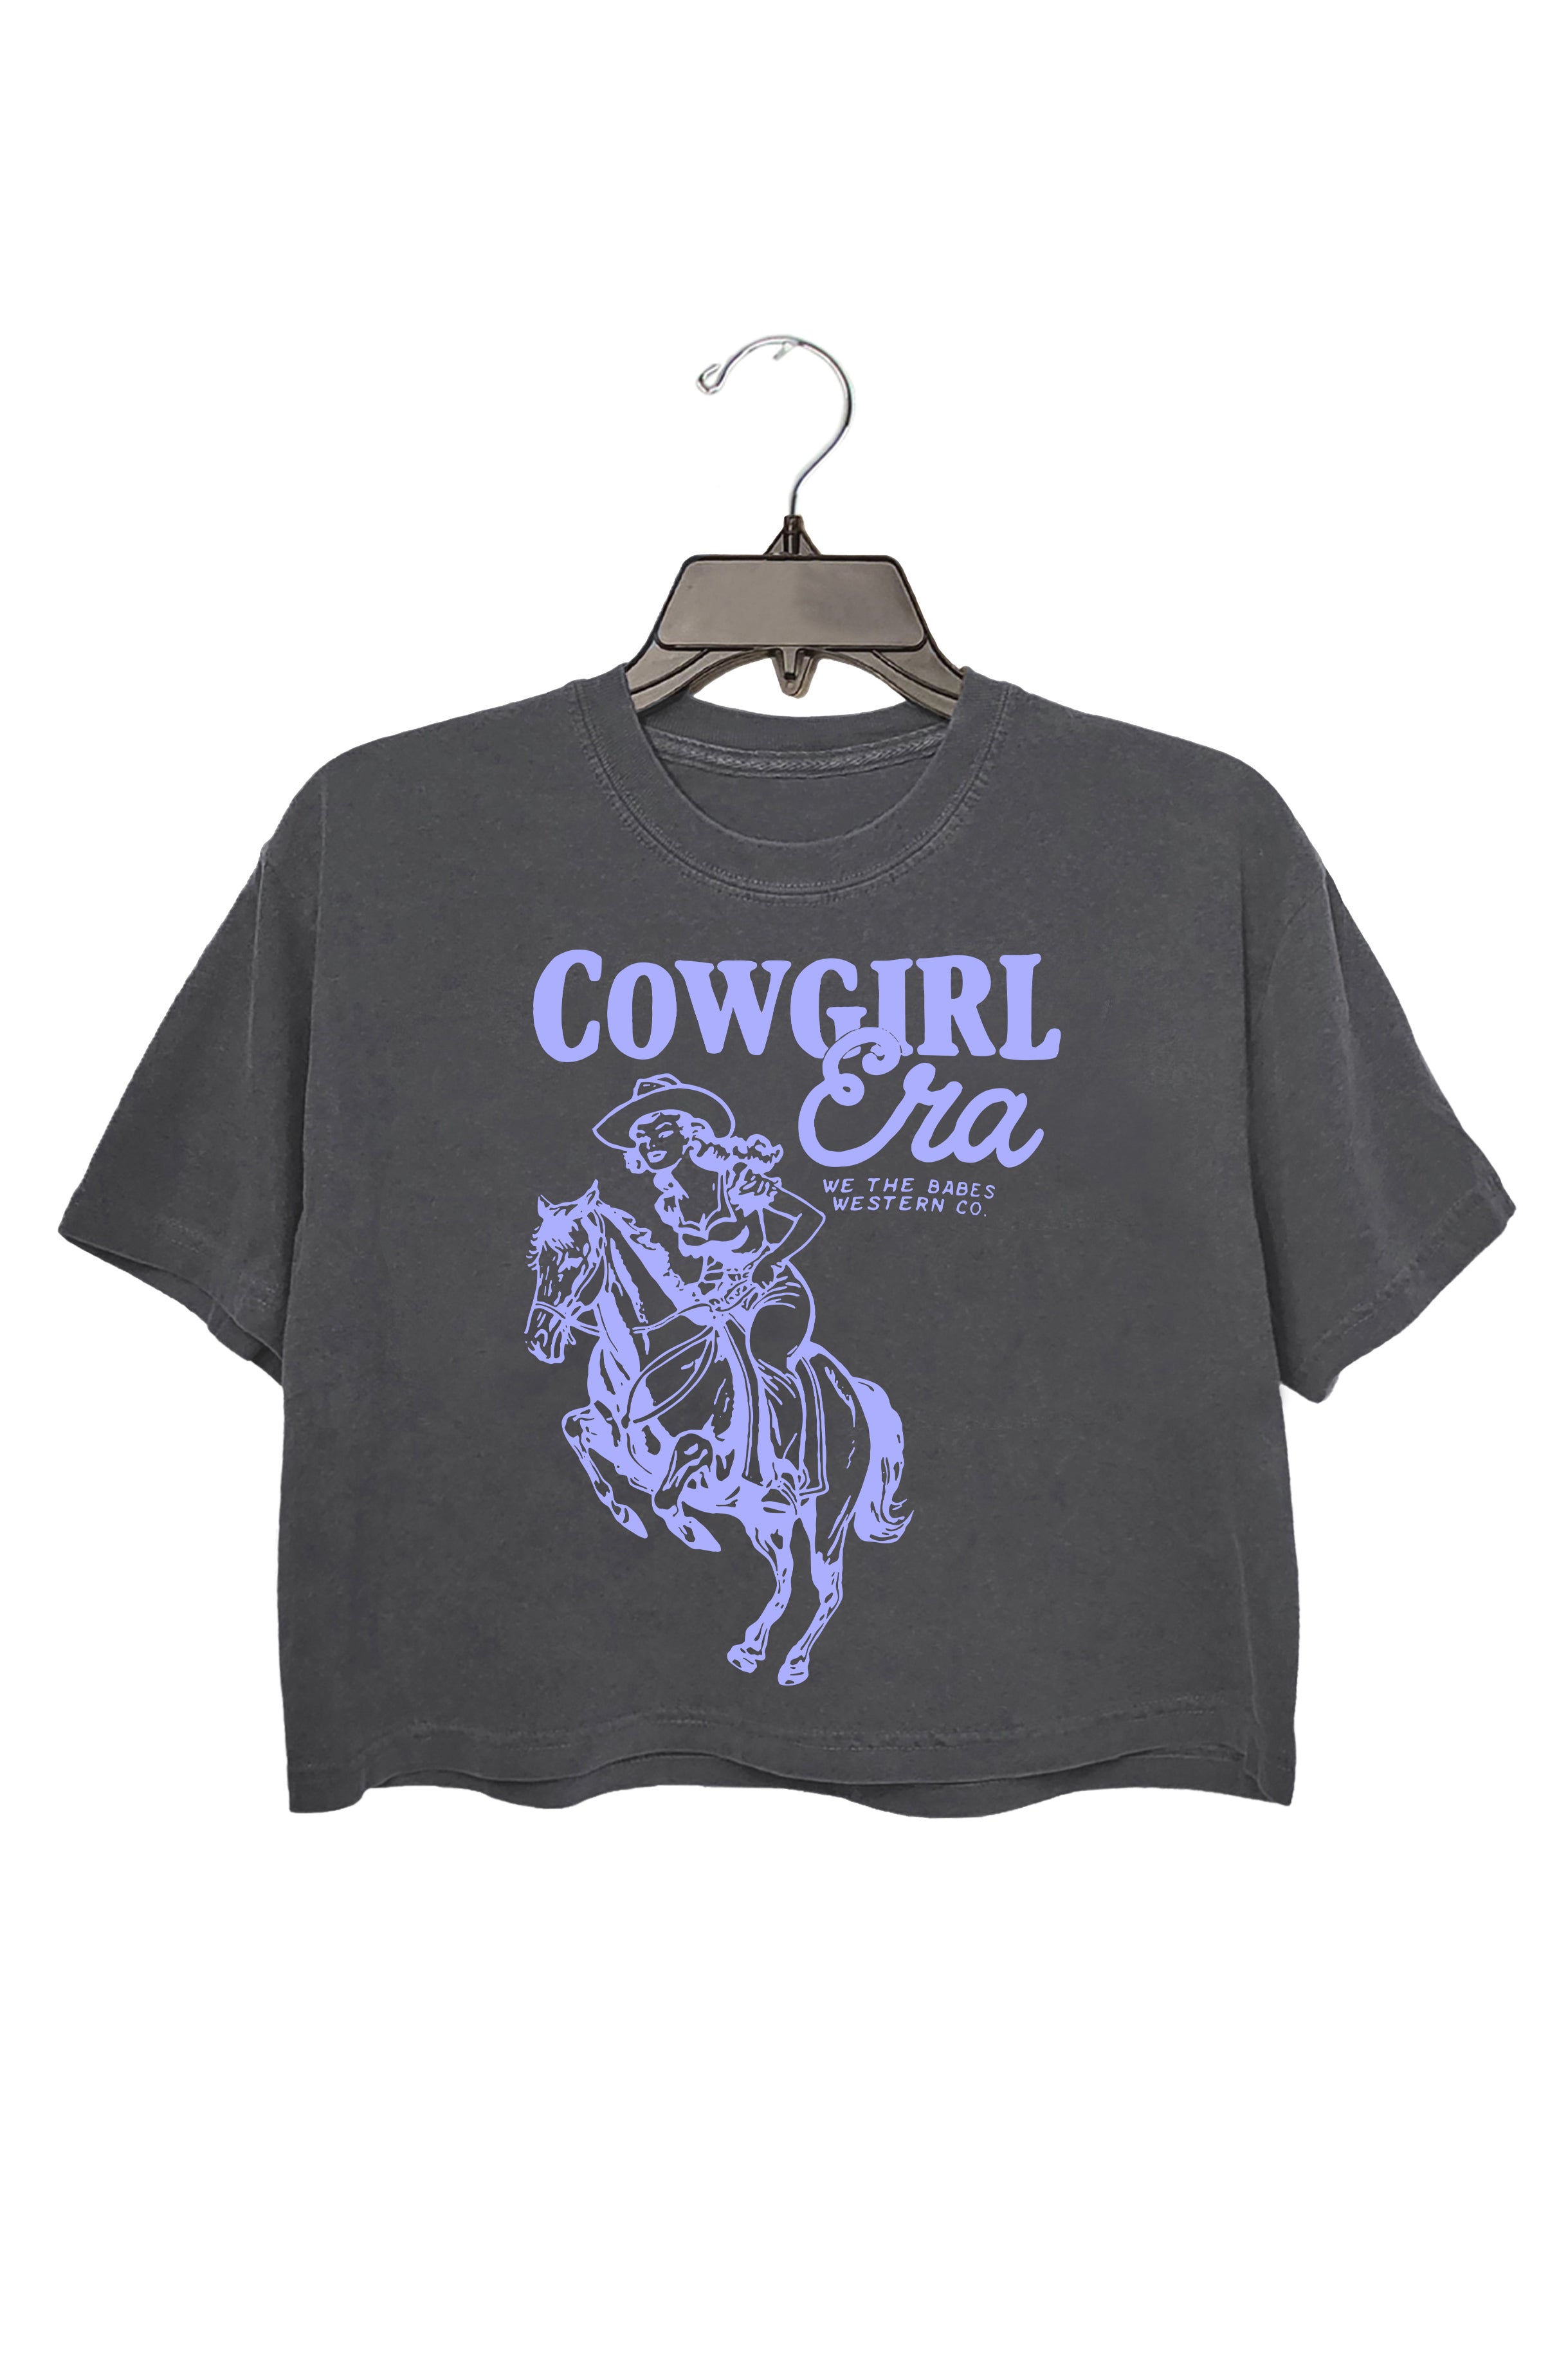 Cowgirl Era Crop Top For Women